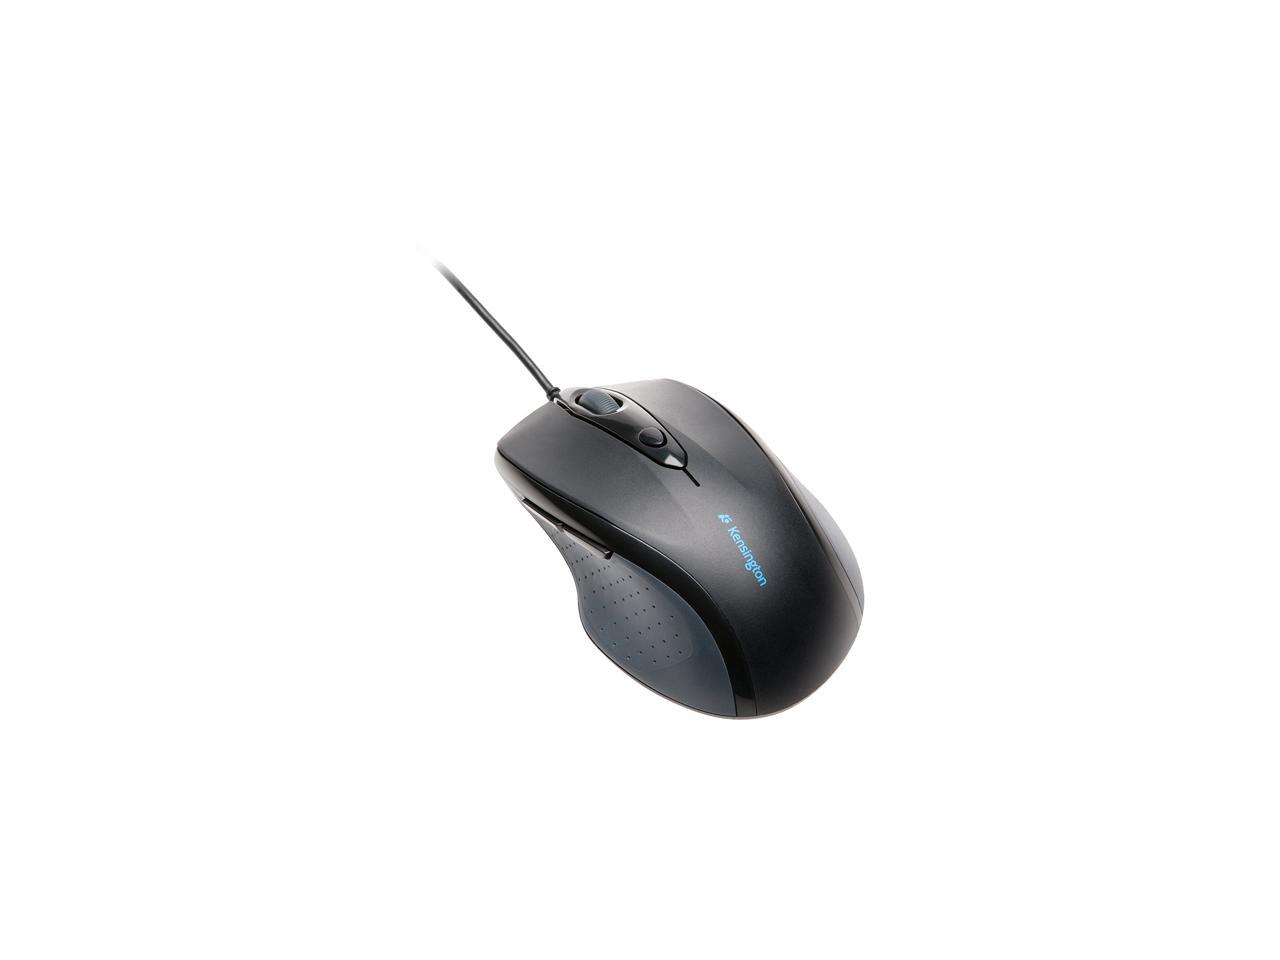 Kensington Pro Fit Full-Size Mouse K72369US Black 1 x Wheel USB Wired Optical 2400 dpi Mouse